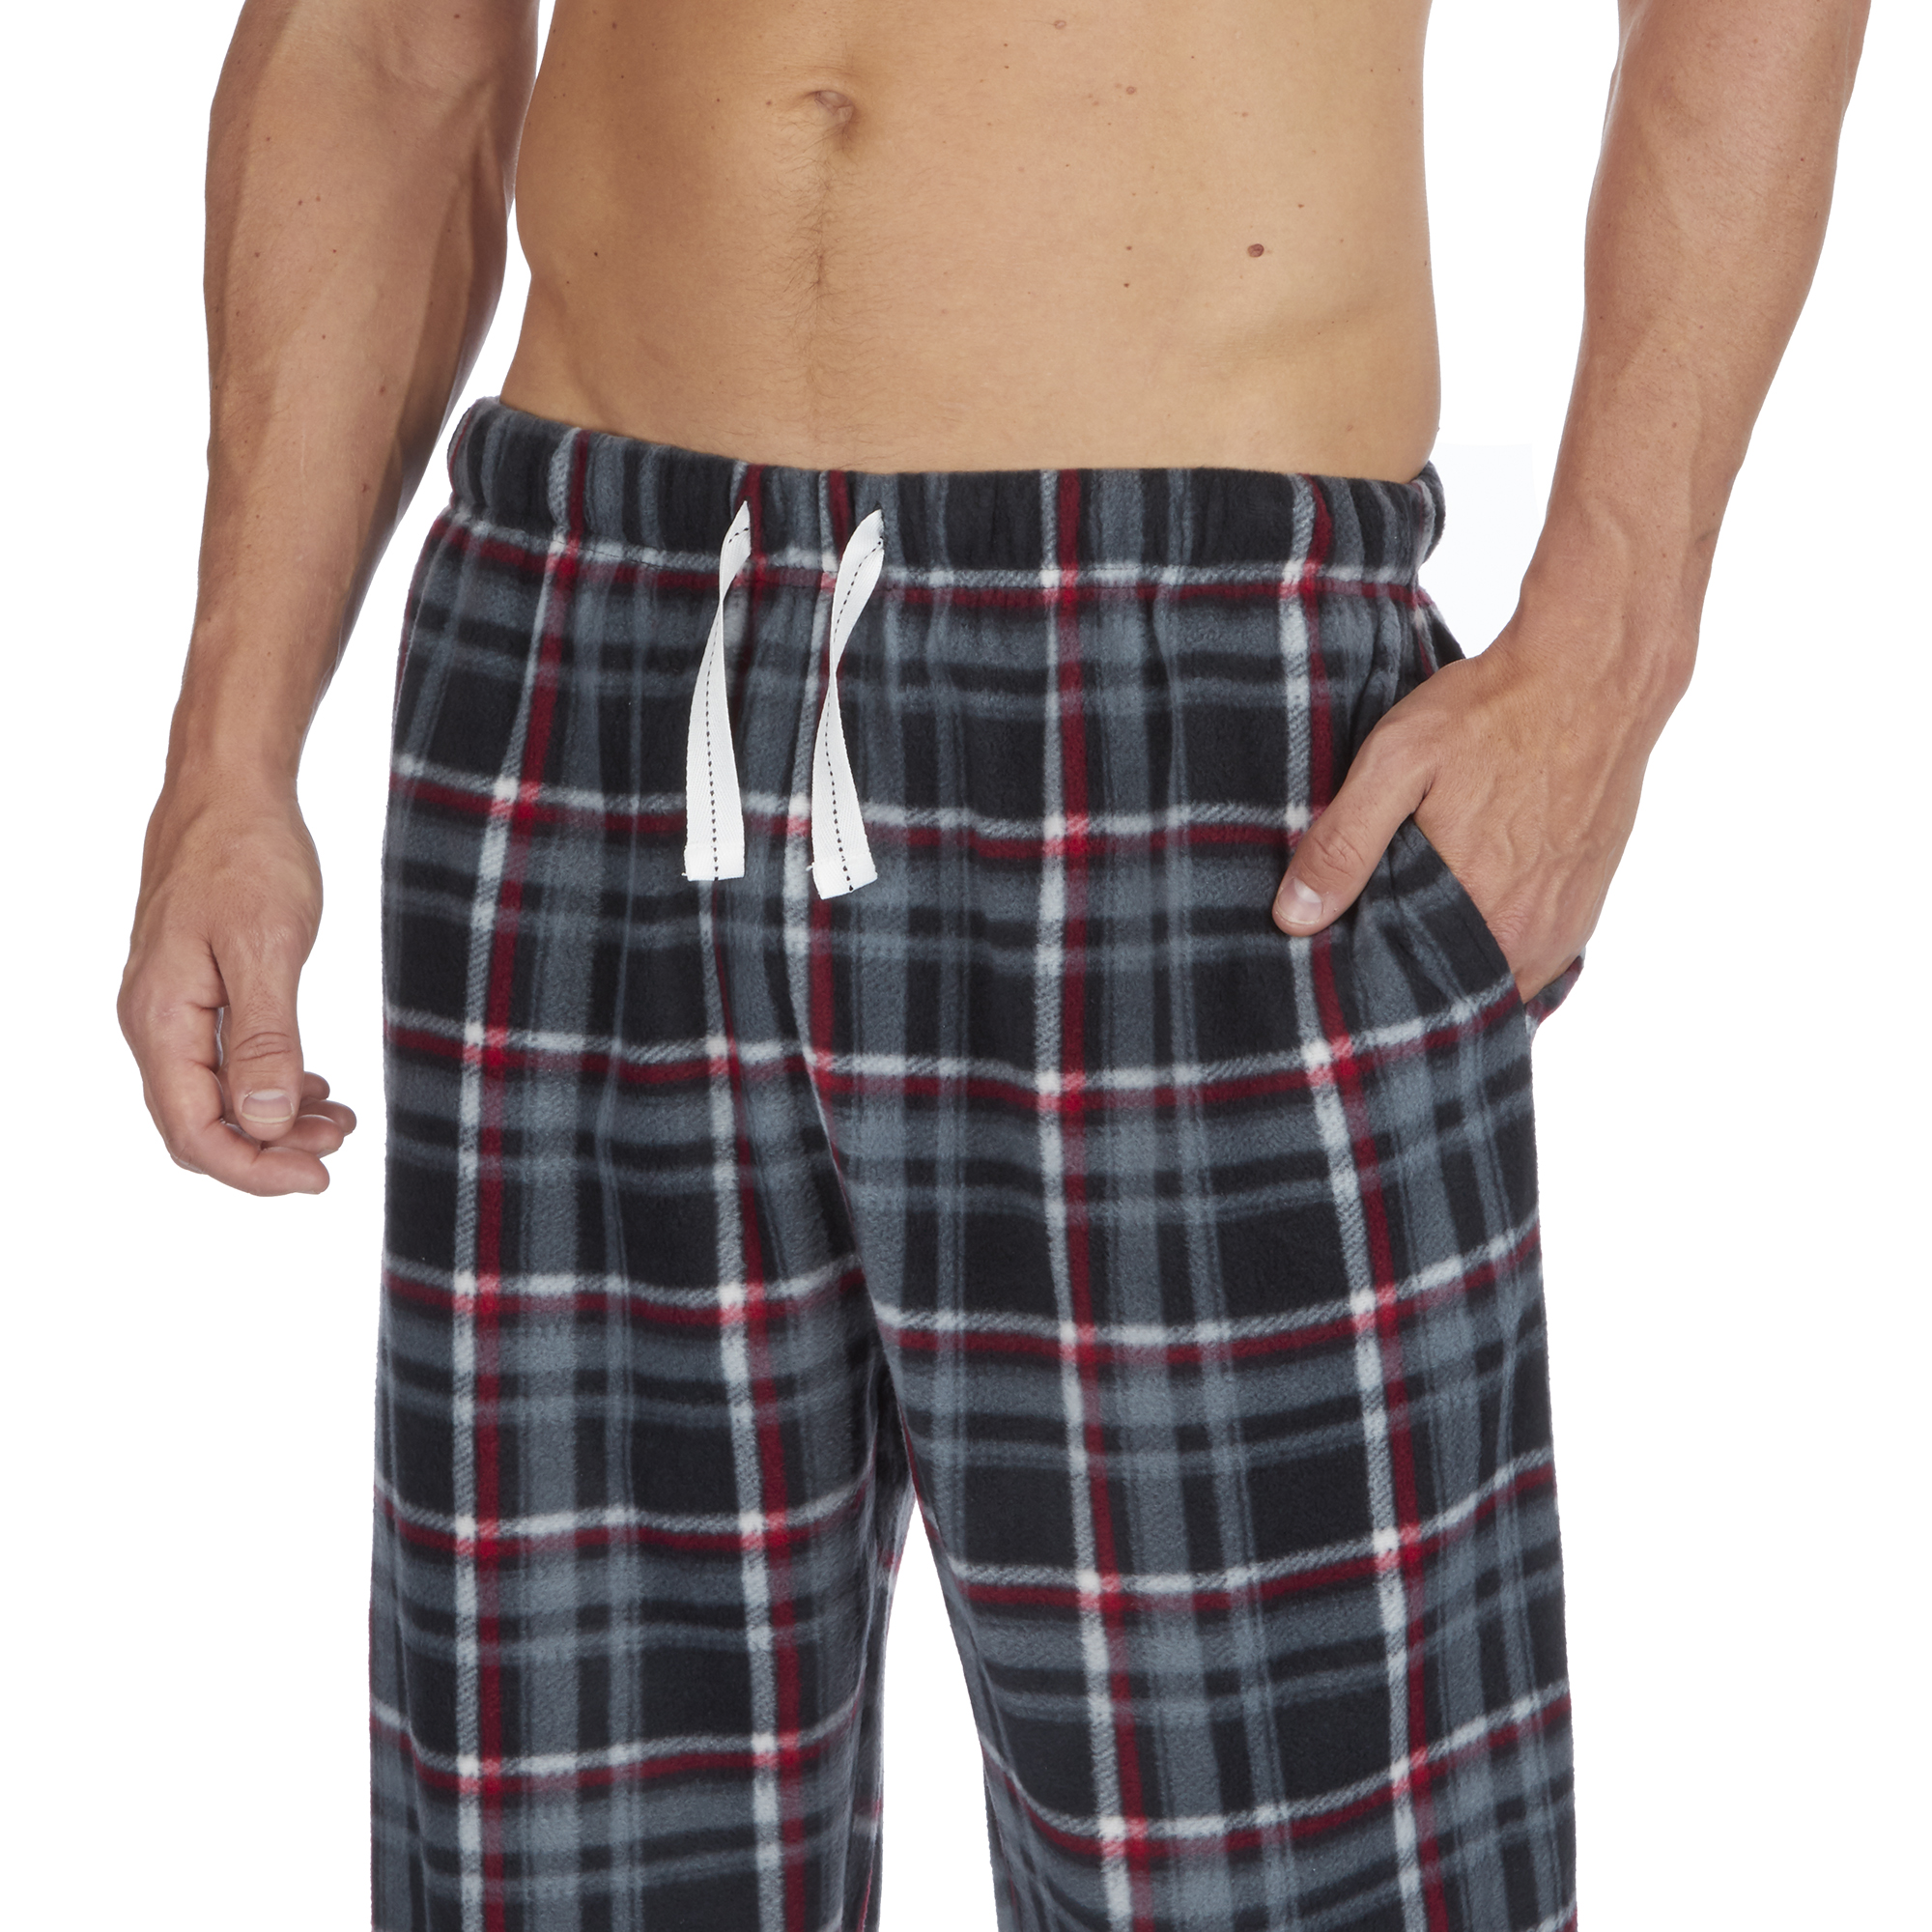 Mens Soft Warm Microfleece Checked Lounge Pyjama PJ Bottoms Pants Sizes ...